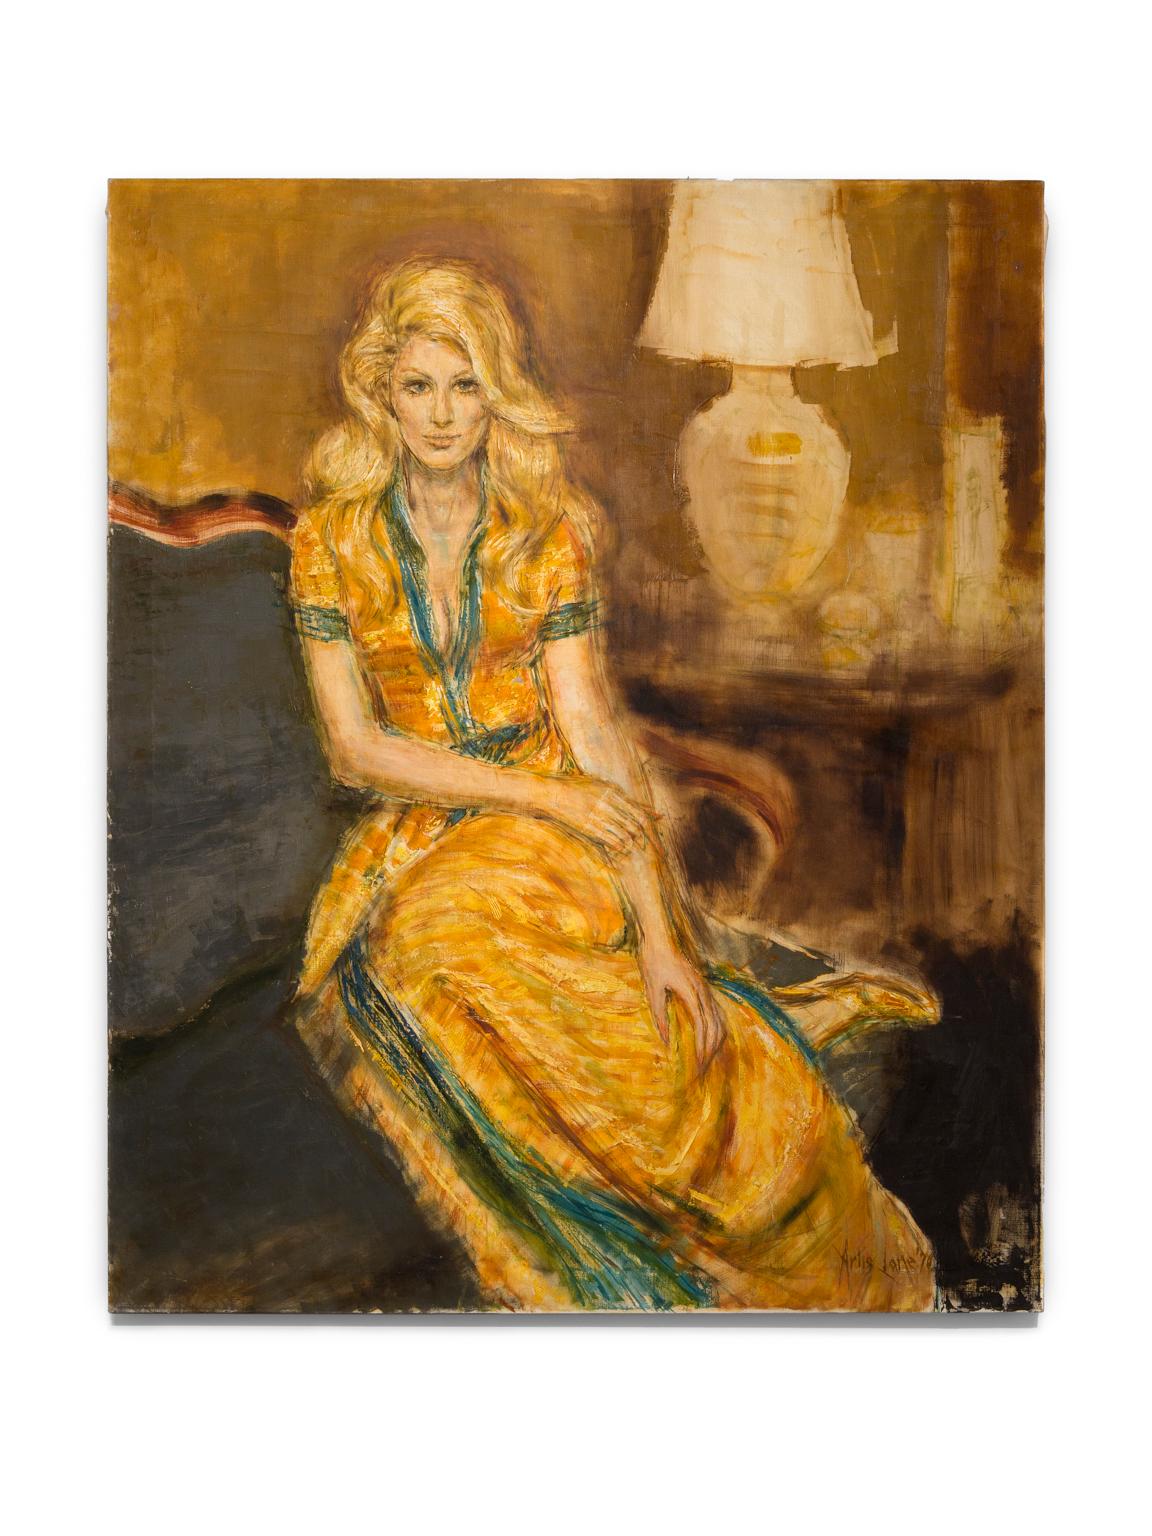 "Baby Jane Holzer"  Female Portrait, Golden & Green Colors, Celebrity, Intimate